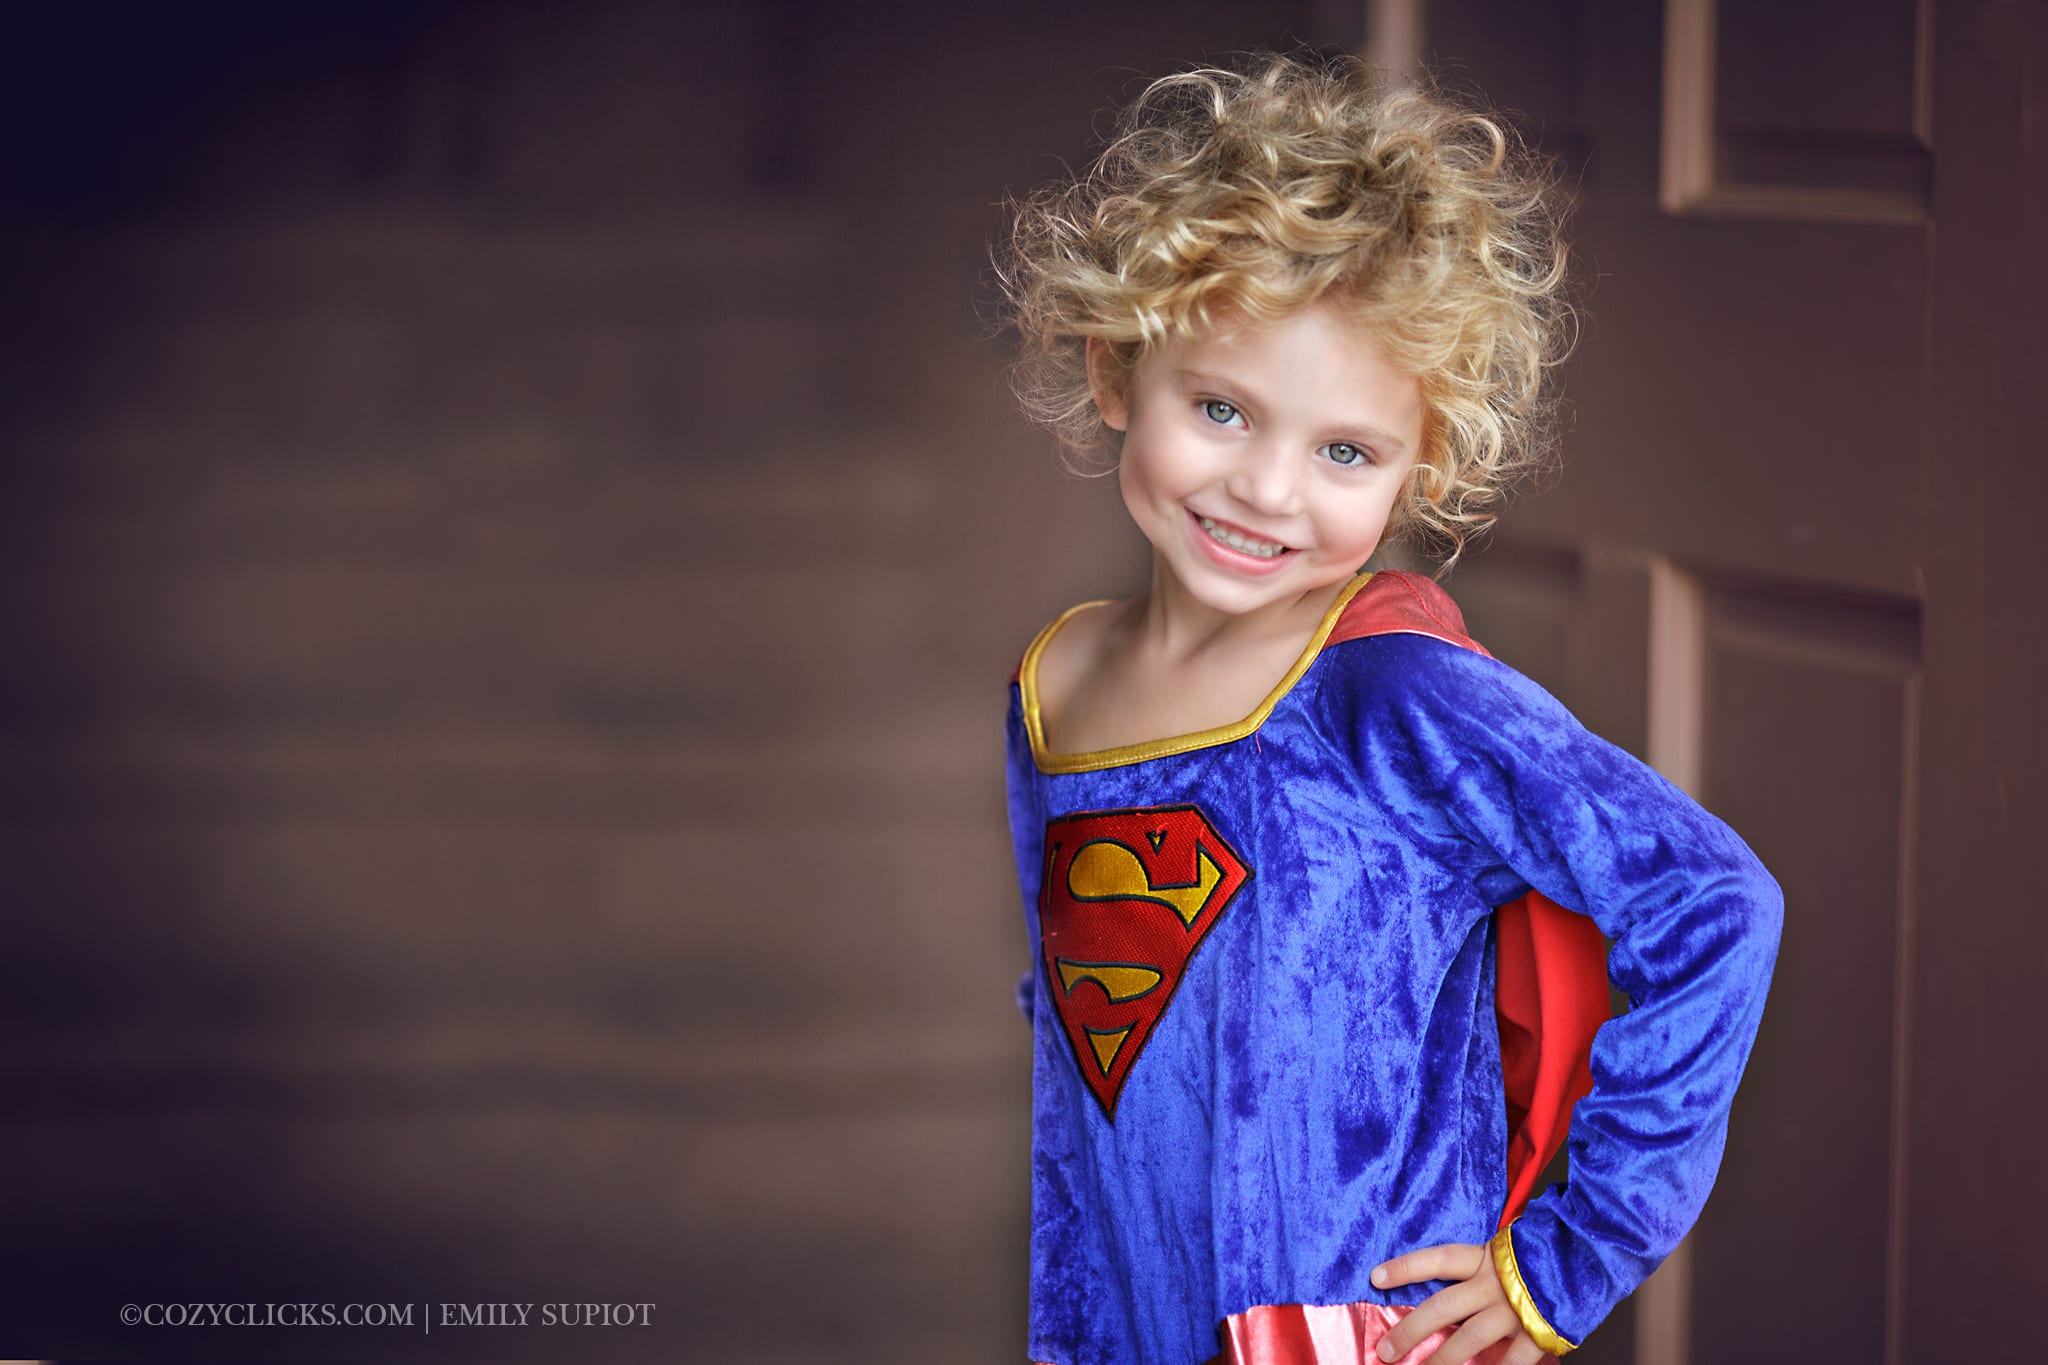 Phoneix children's Photographer captures little girl in a cute super girl costume.